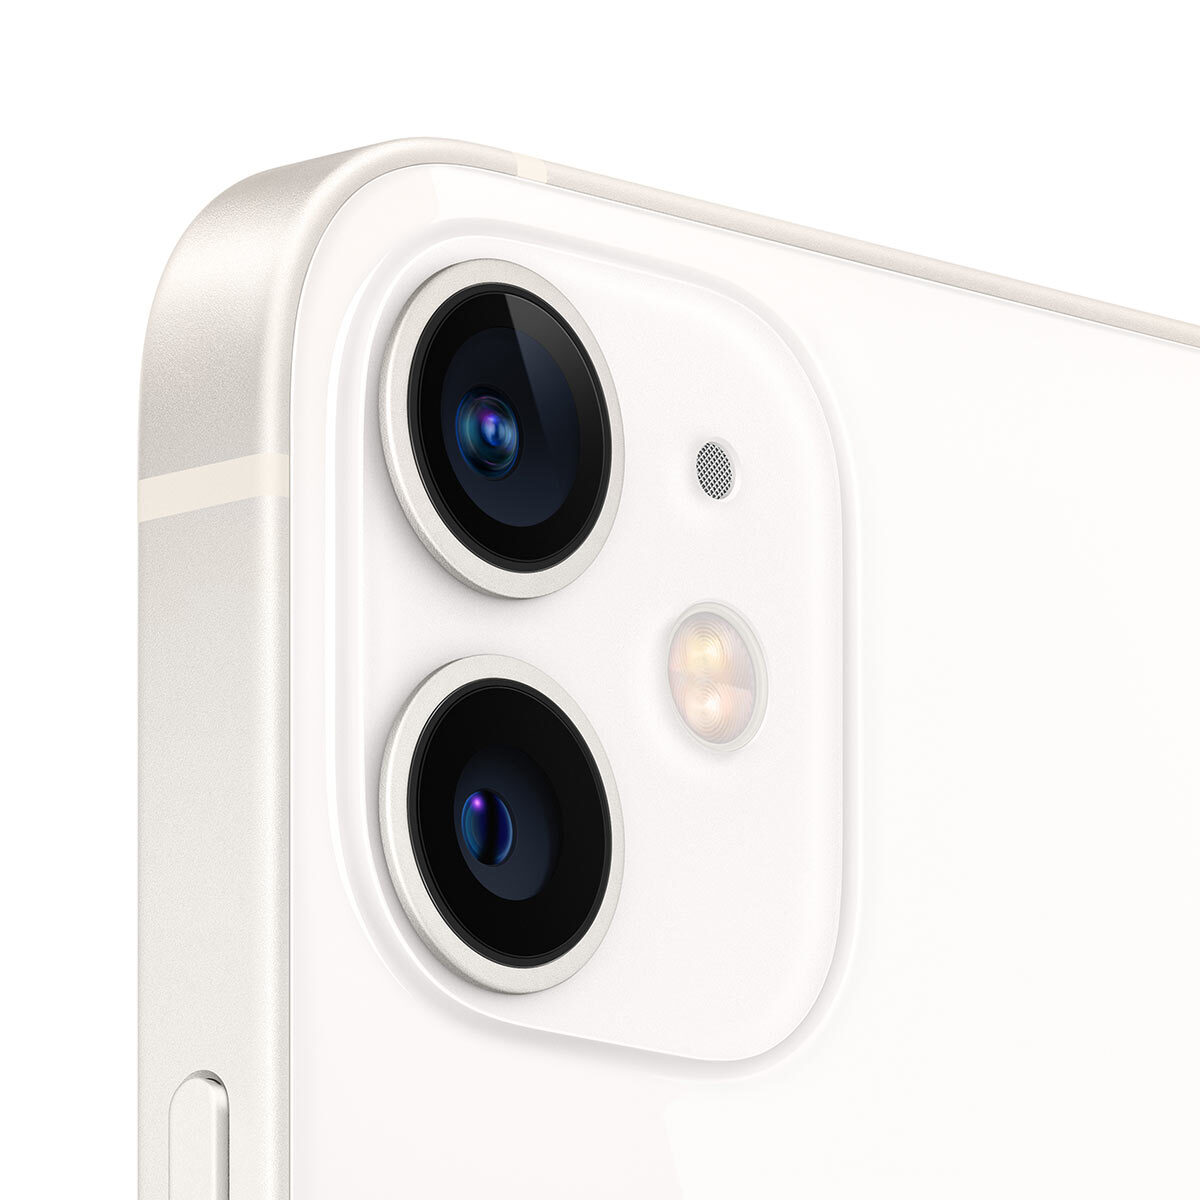 Buy Apple iPhone 12 mini 64GB Sim Free Mobile Phone in White, MGDY3B/A at costco.co.uk